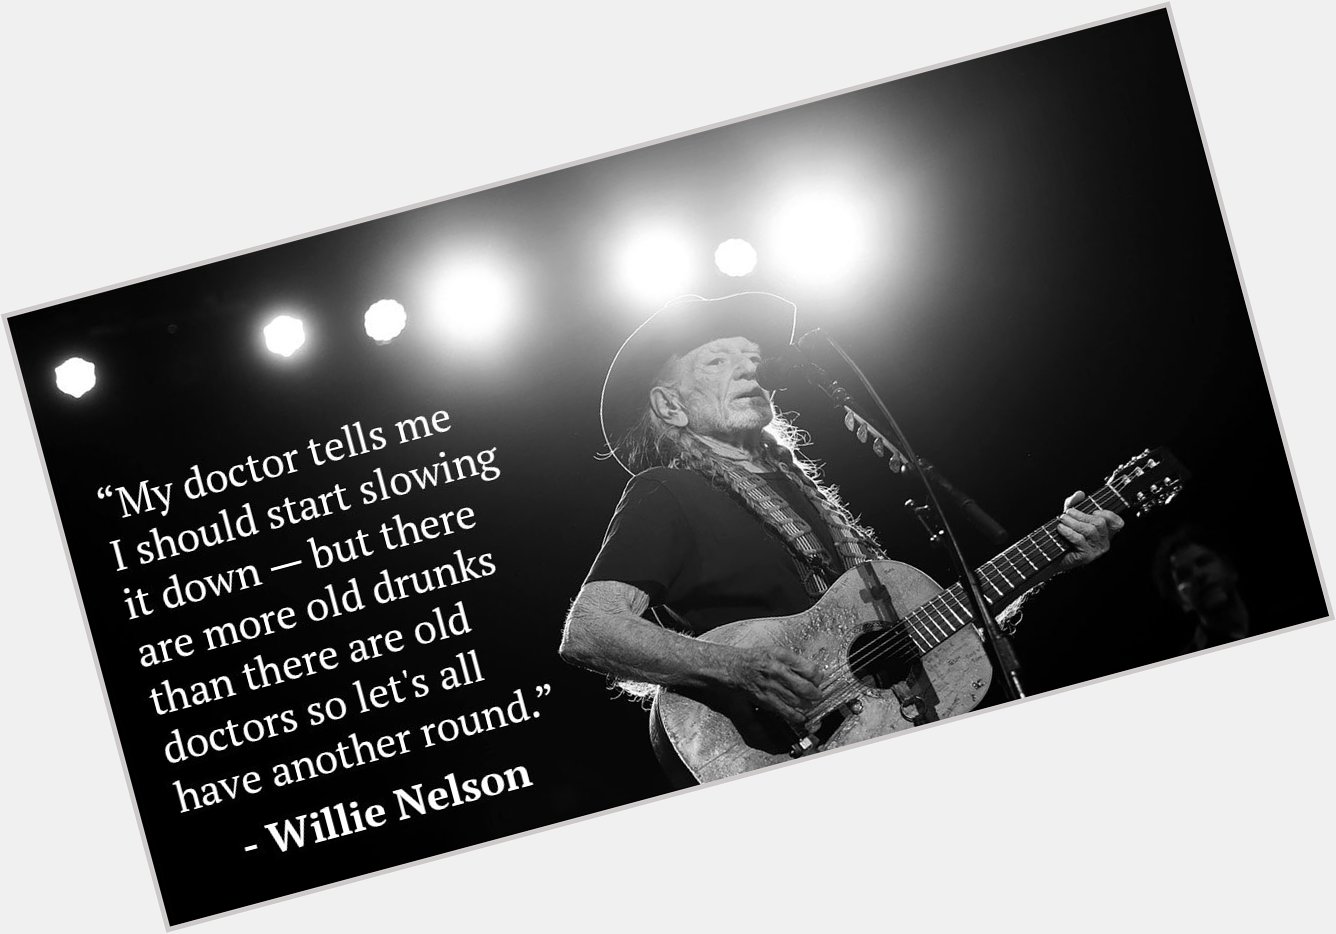 Happy 84th birthday, Willie!  